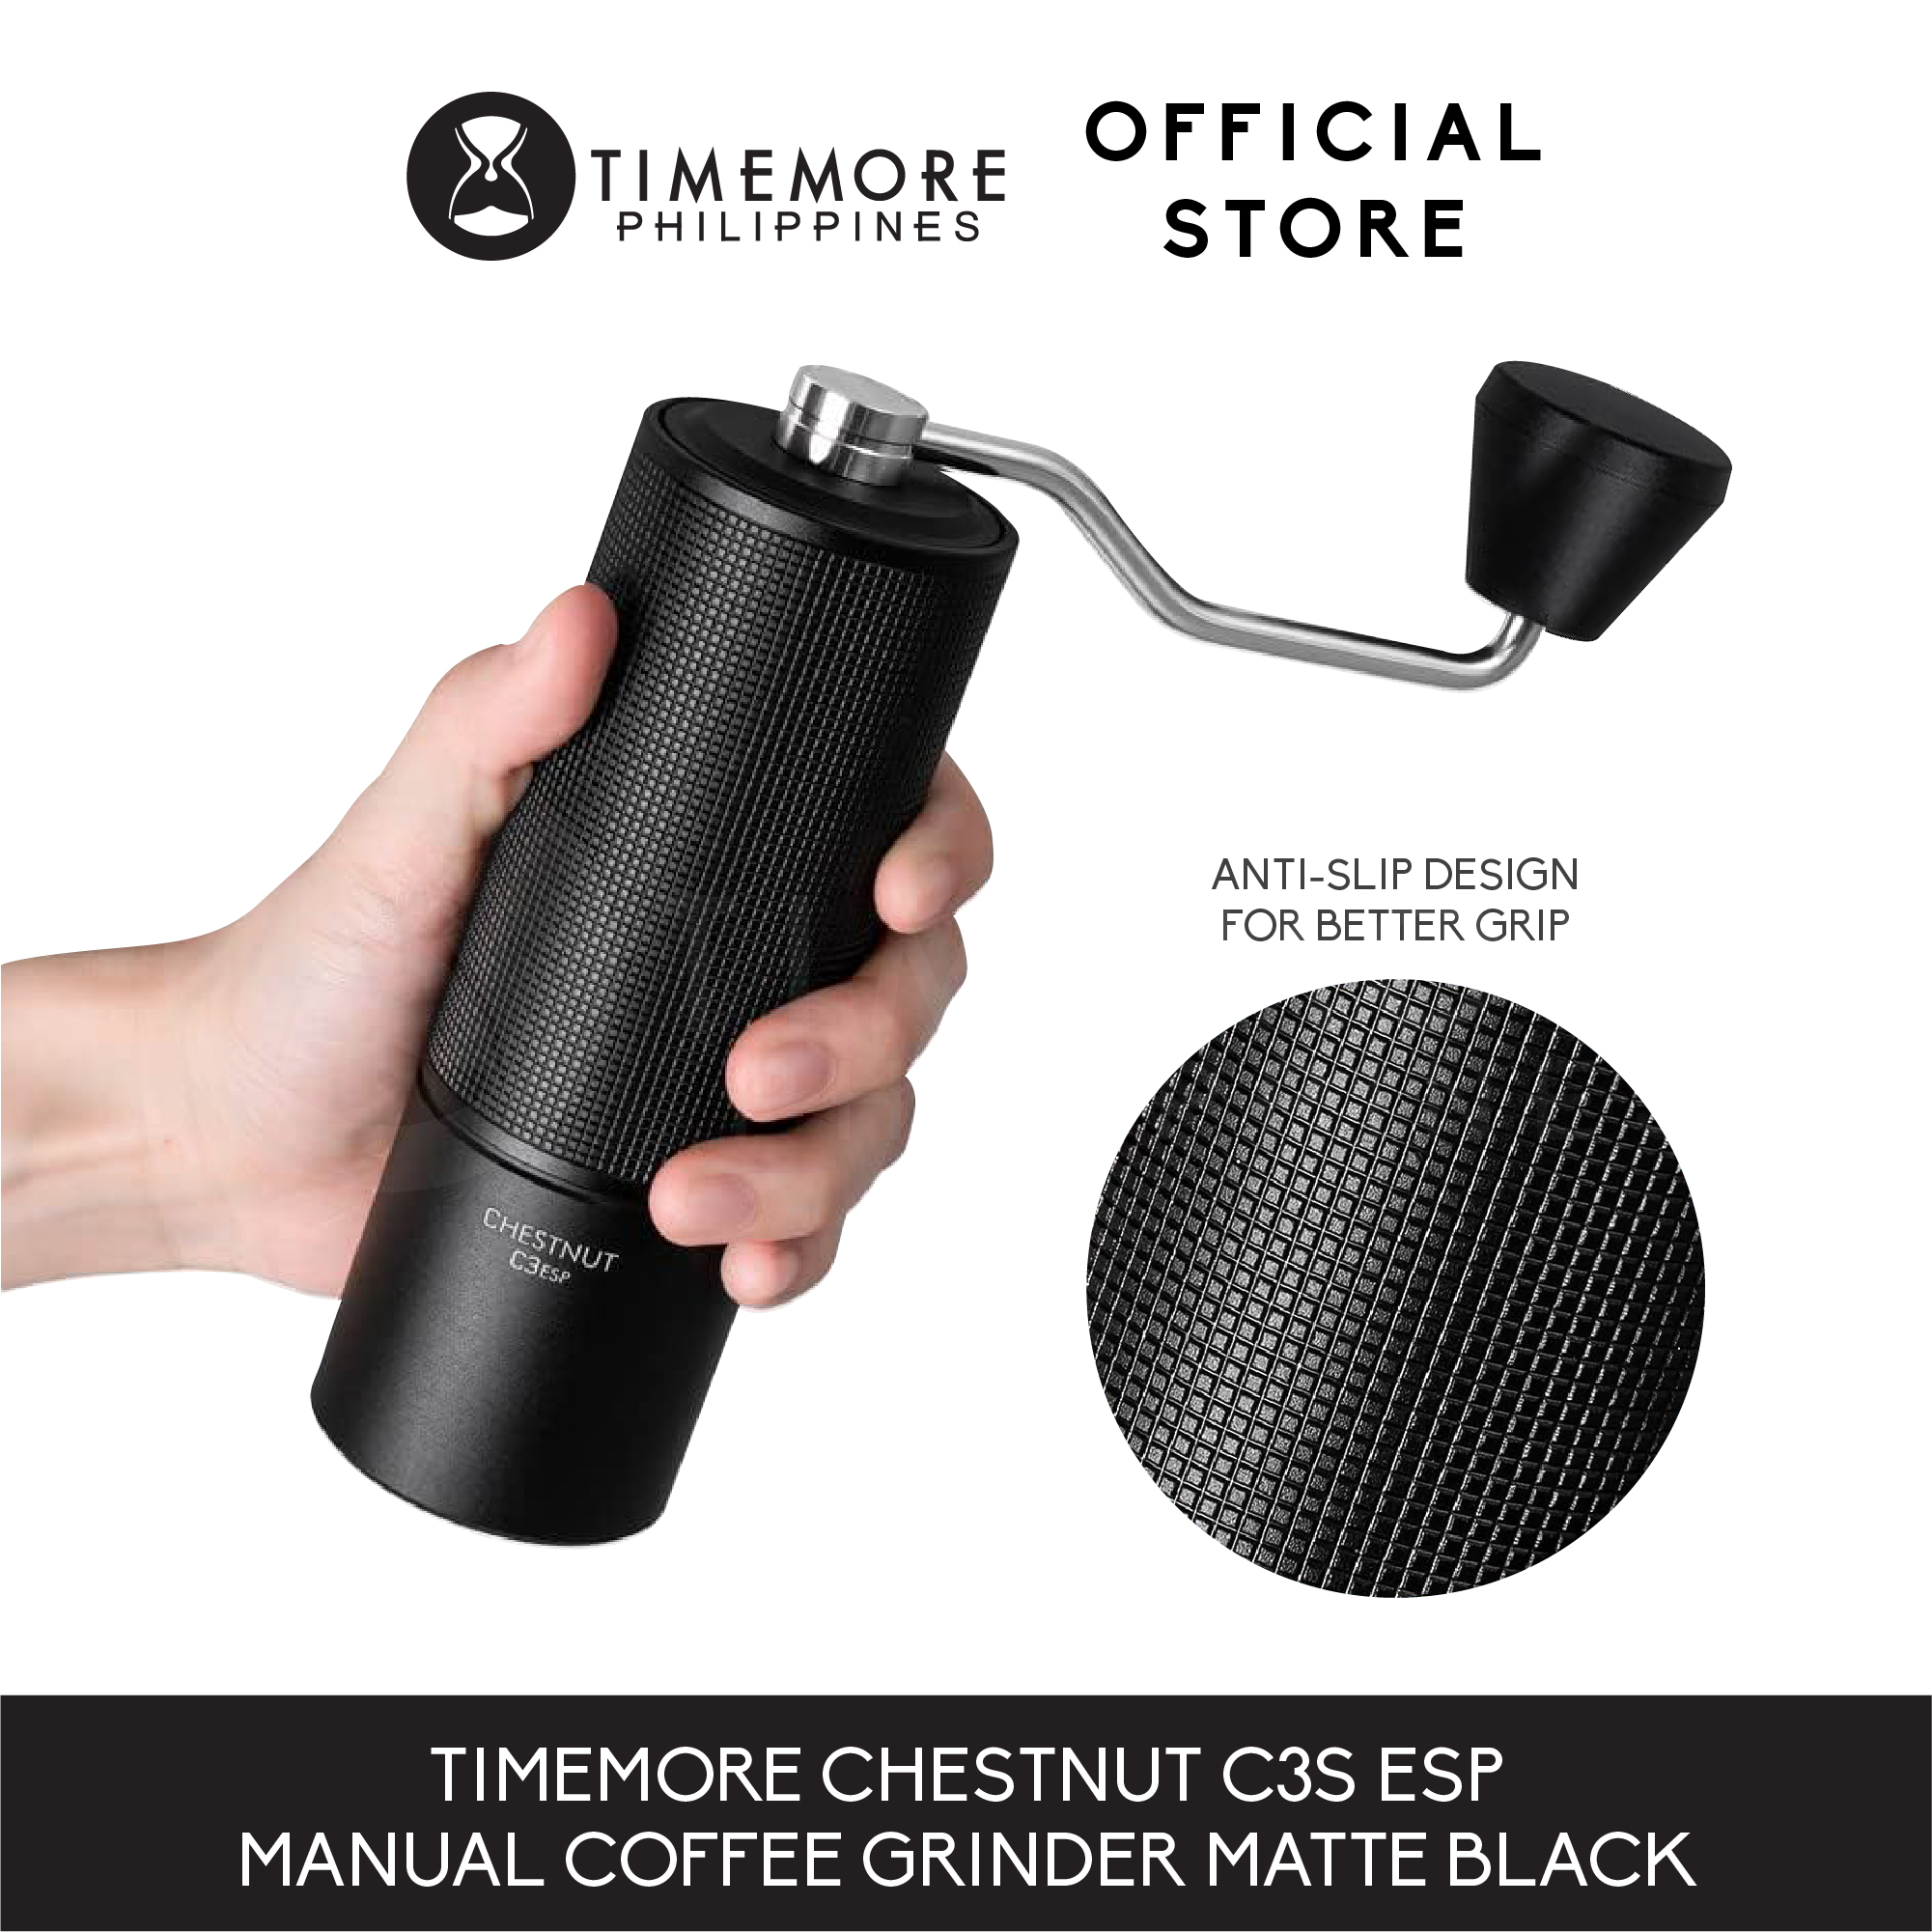 Timemore Chestnut C3 Manual Coffee Grinder, Matte Black